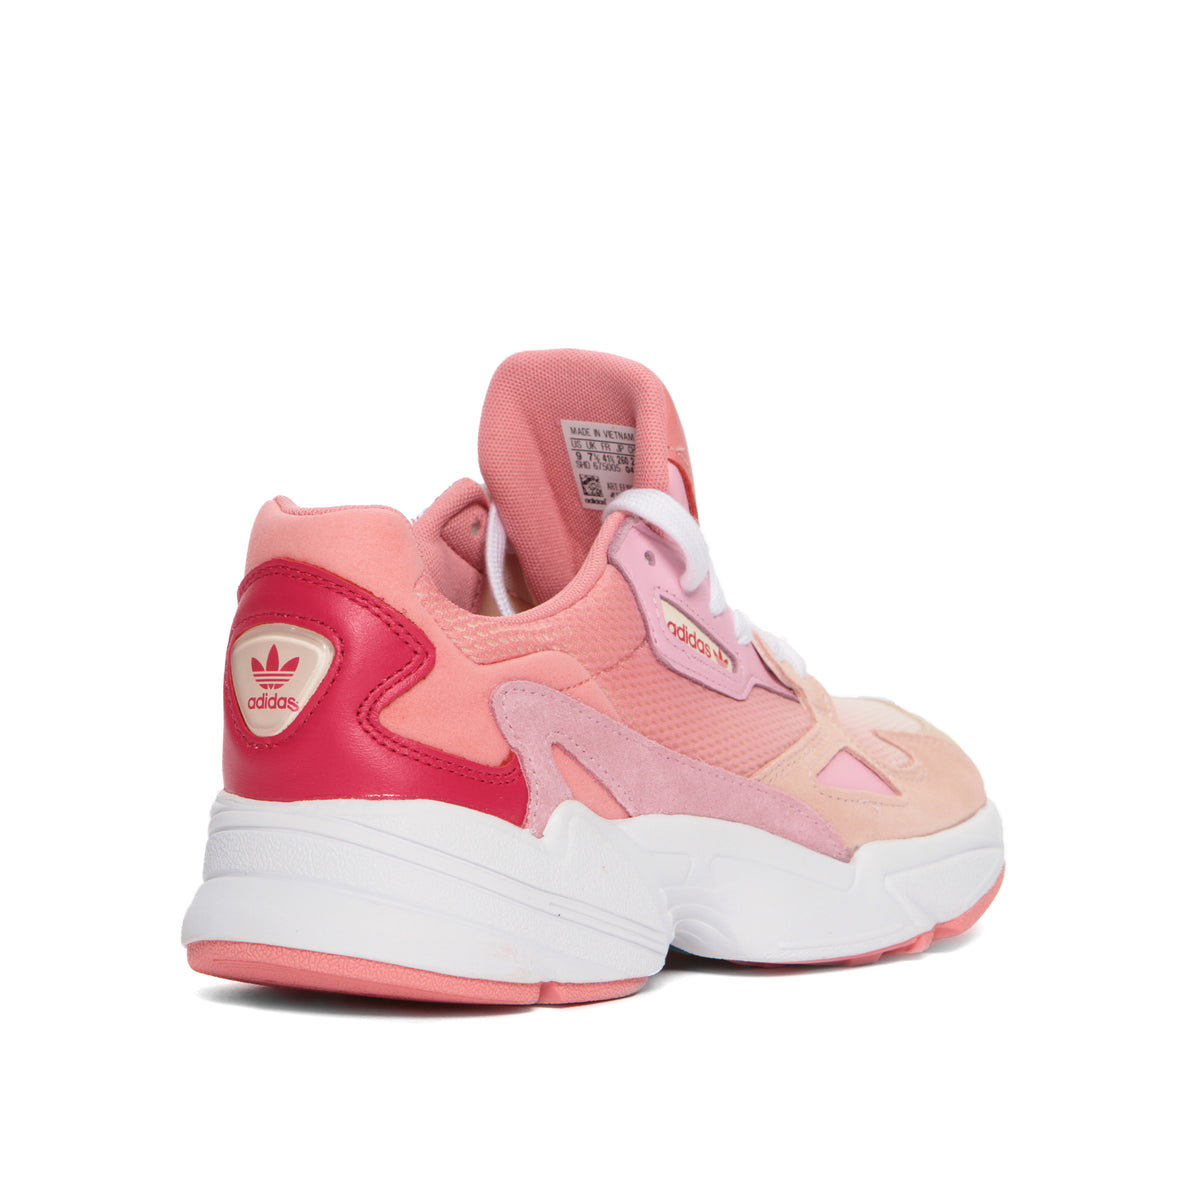 Adidas Originals Women Falcon Shoes Pink